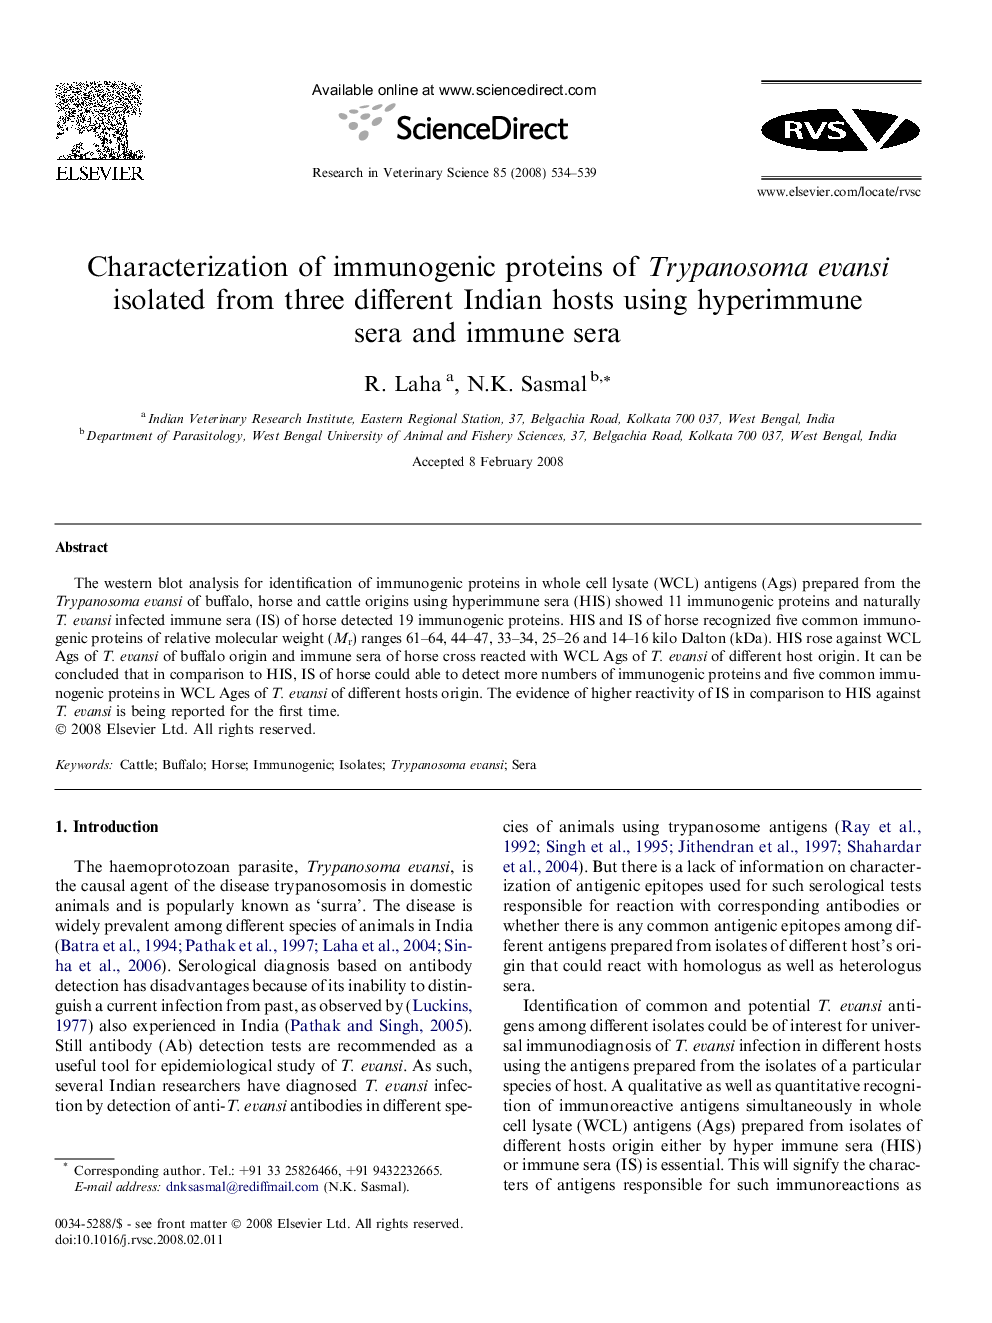 Characterization of immunogenic proteins of Trypanosoma evansi isolated from three different Indian hosts using hyperimmune sera and immune sera